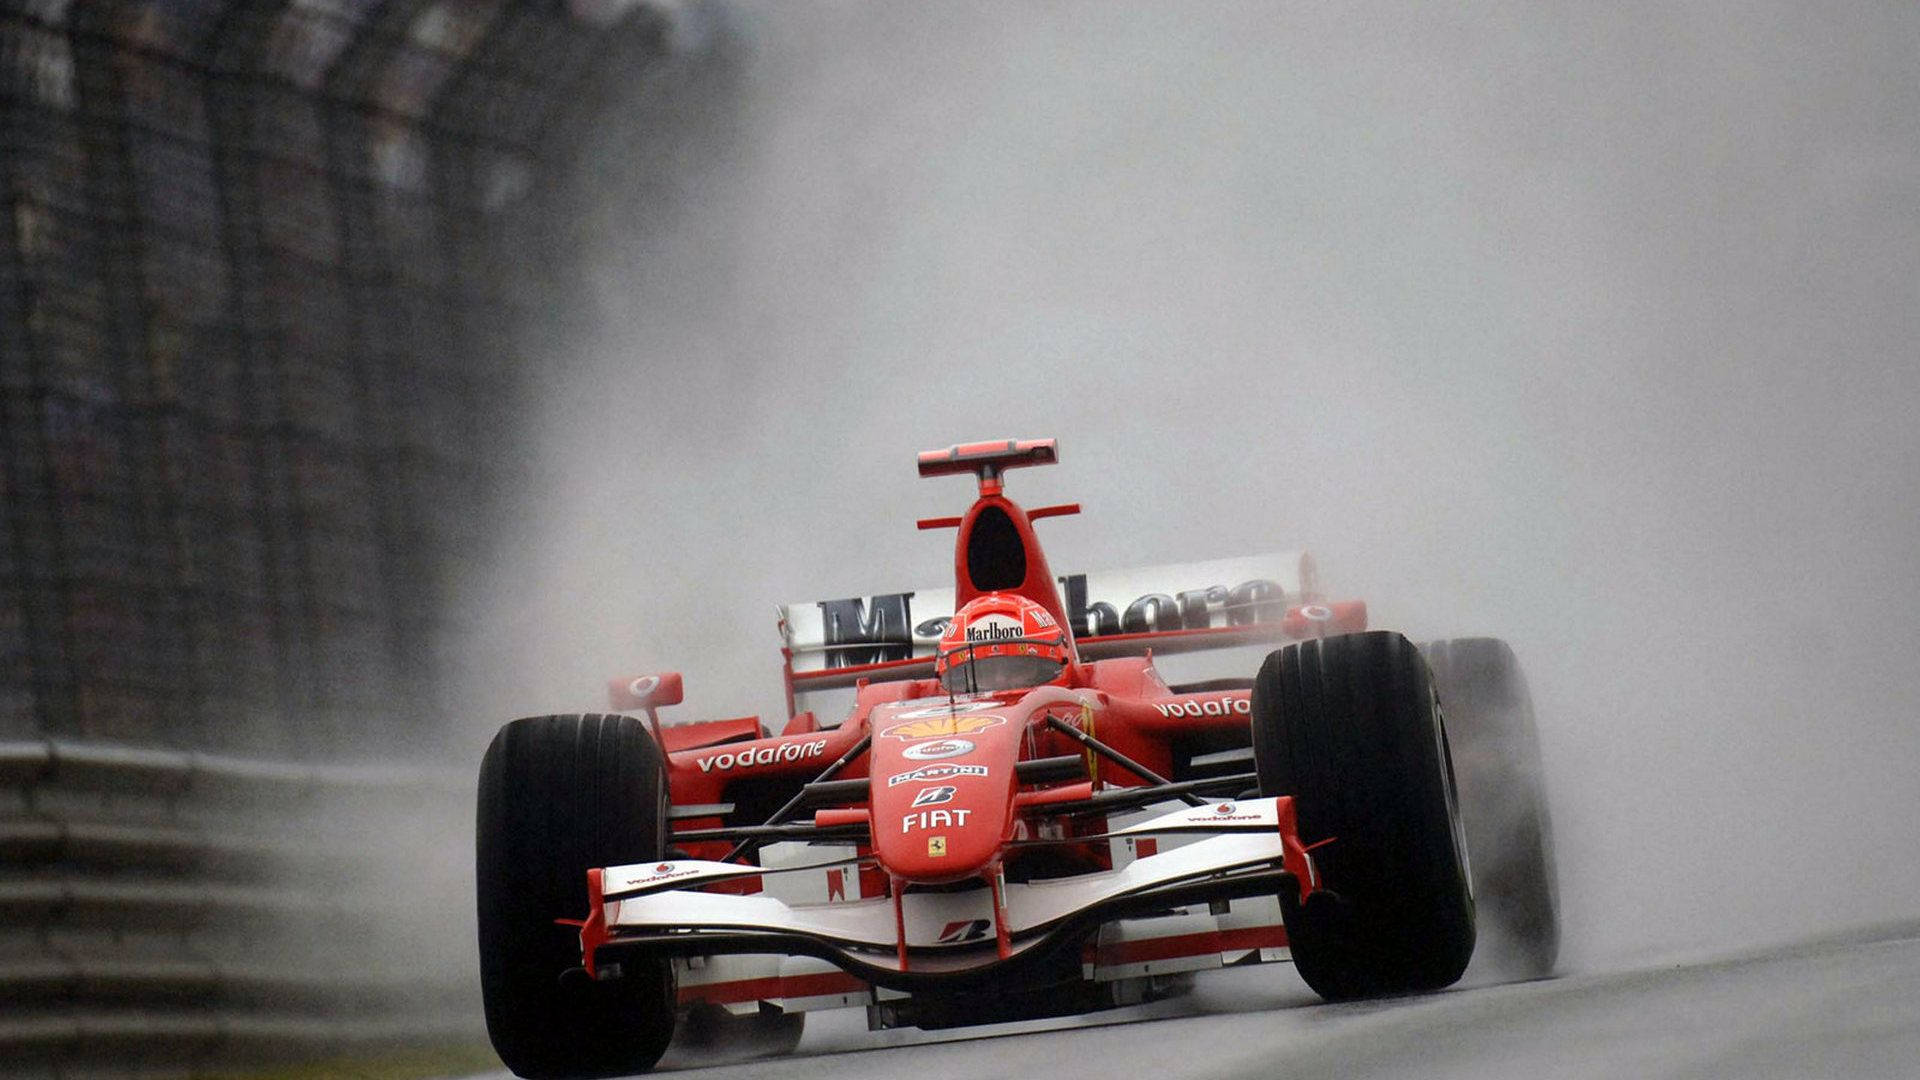 Dramatic Fog Michael Schumacher Background